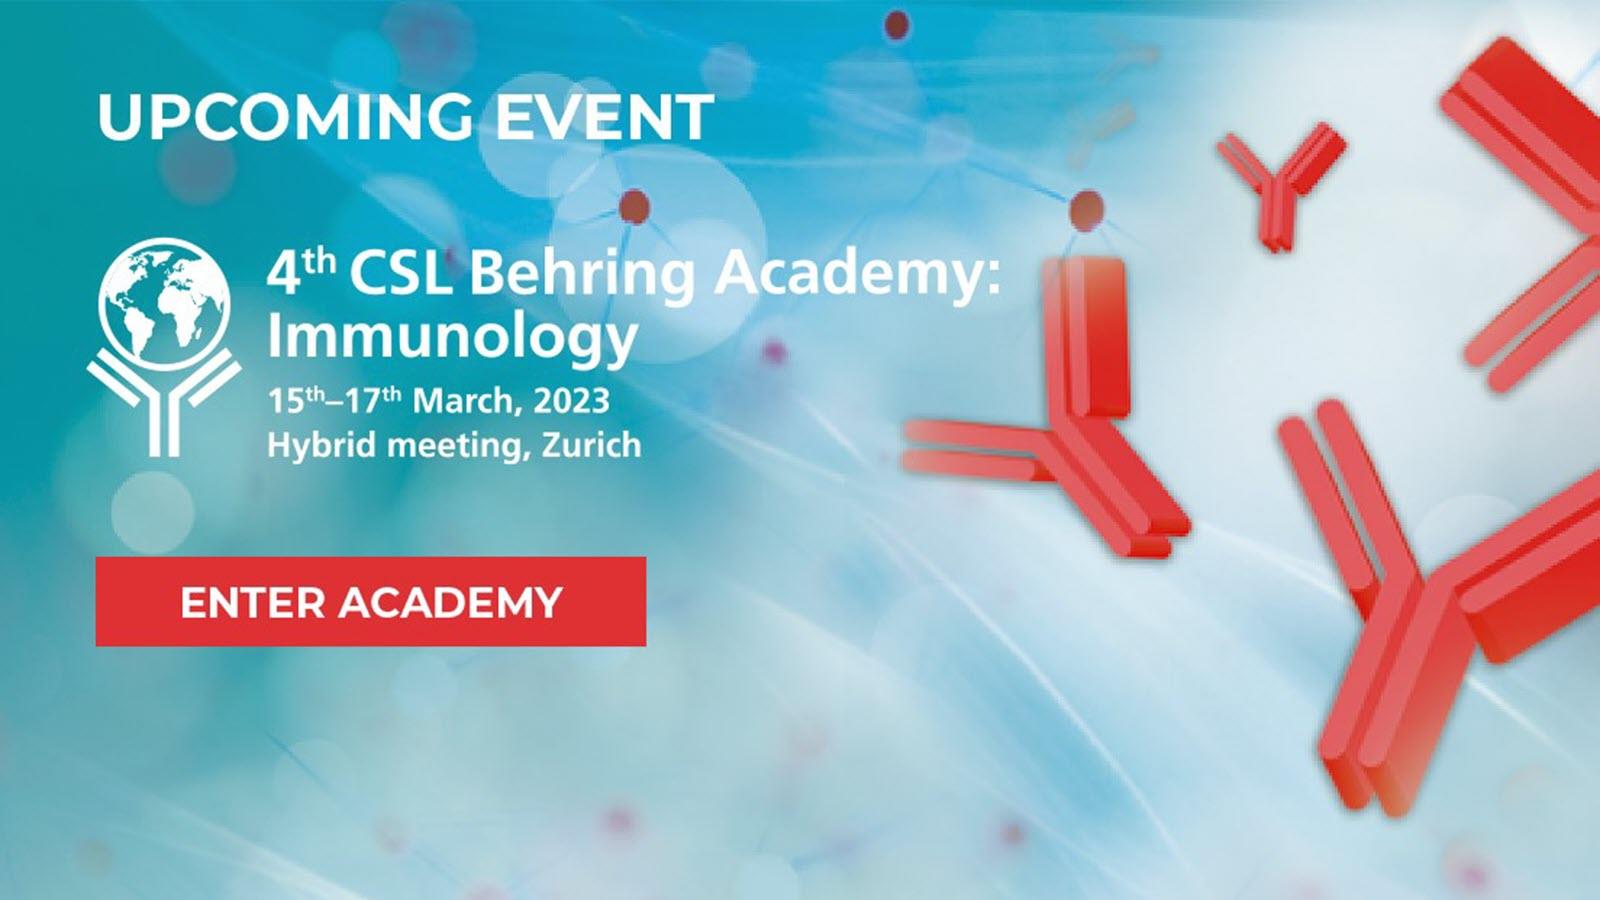 CSL Behring Academy Immunology